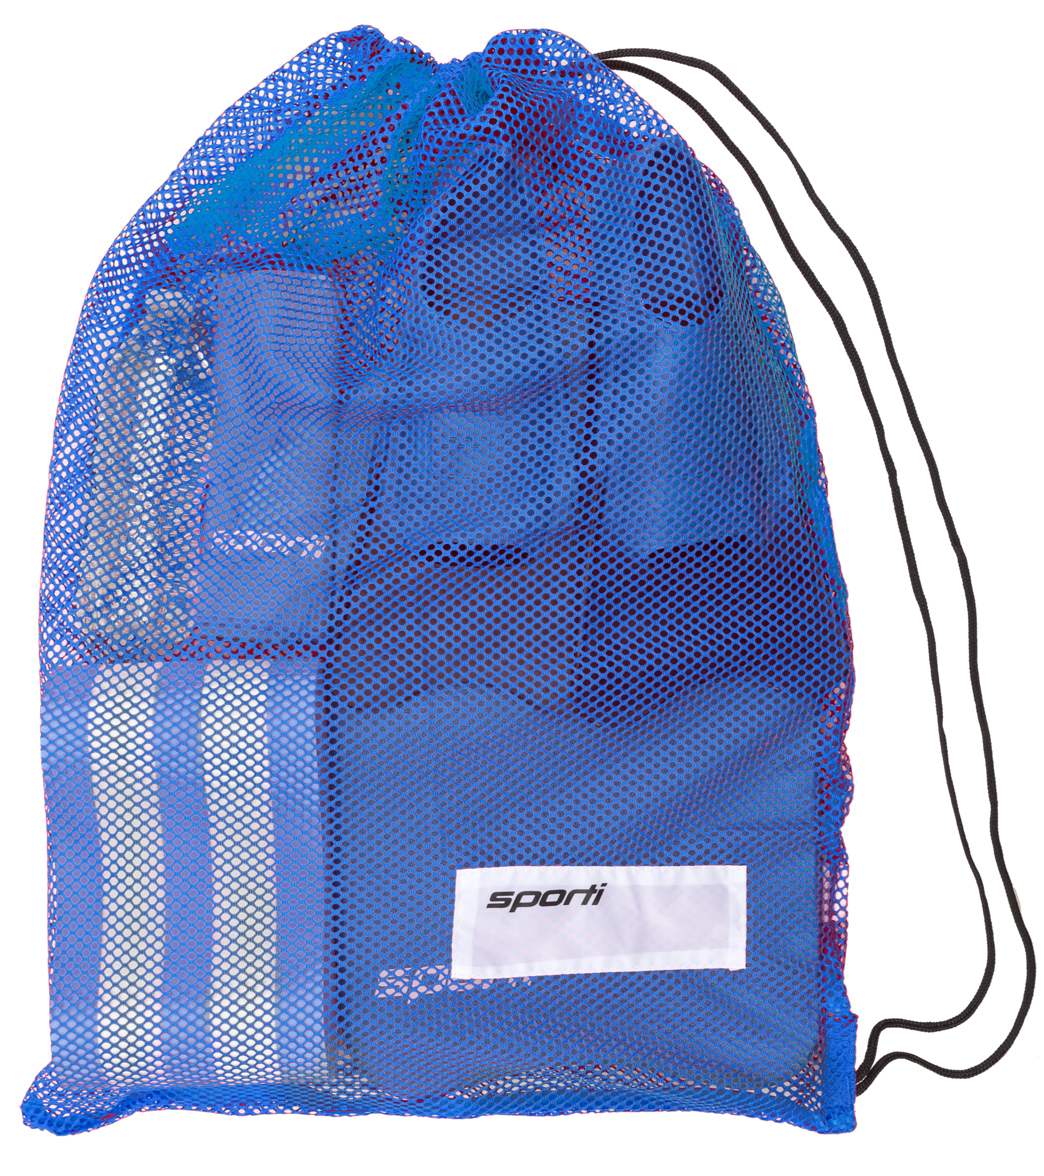 Sporti Mesh Bag - Blue Polyester - Swimoutlet.com